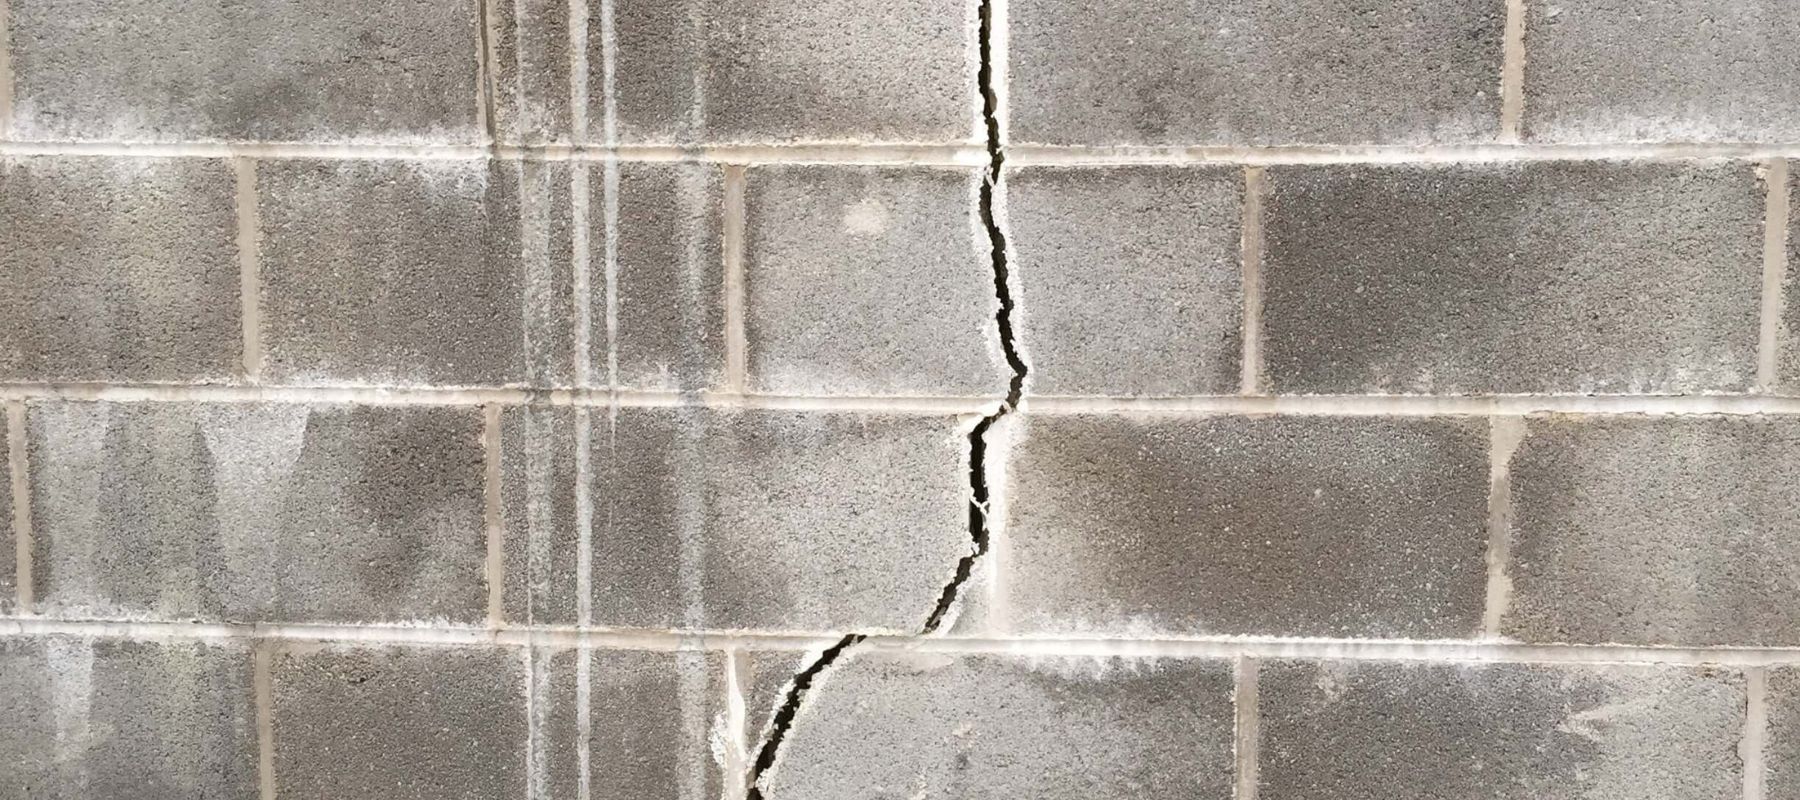 A crack in a brick wall